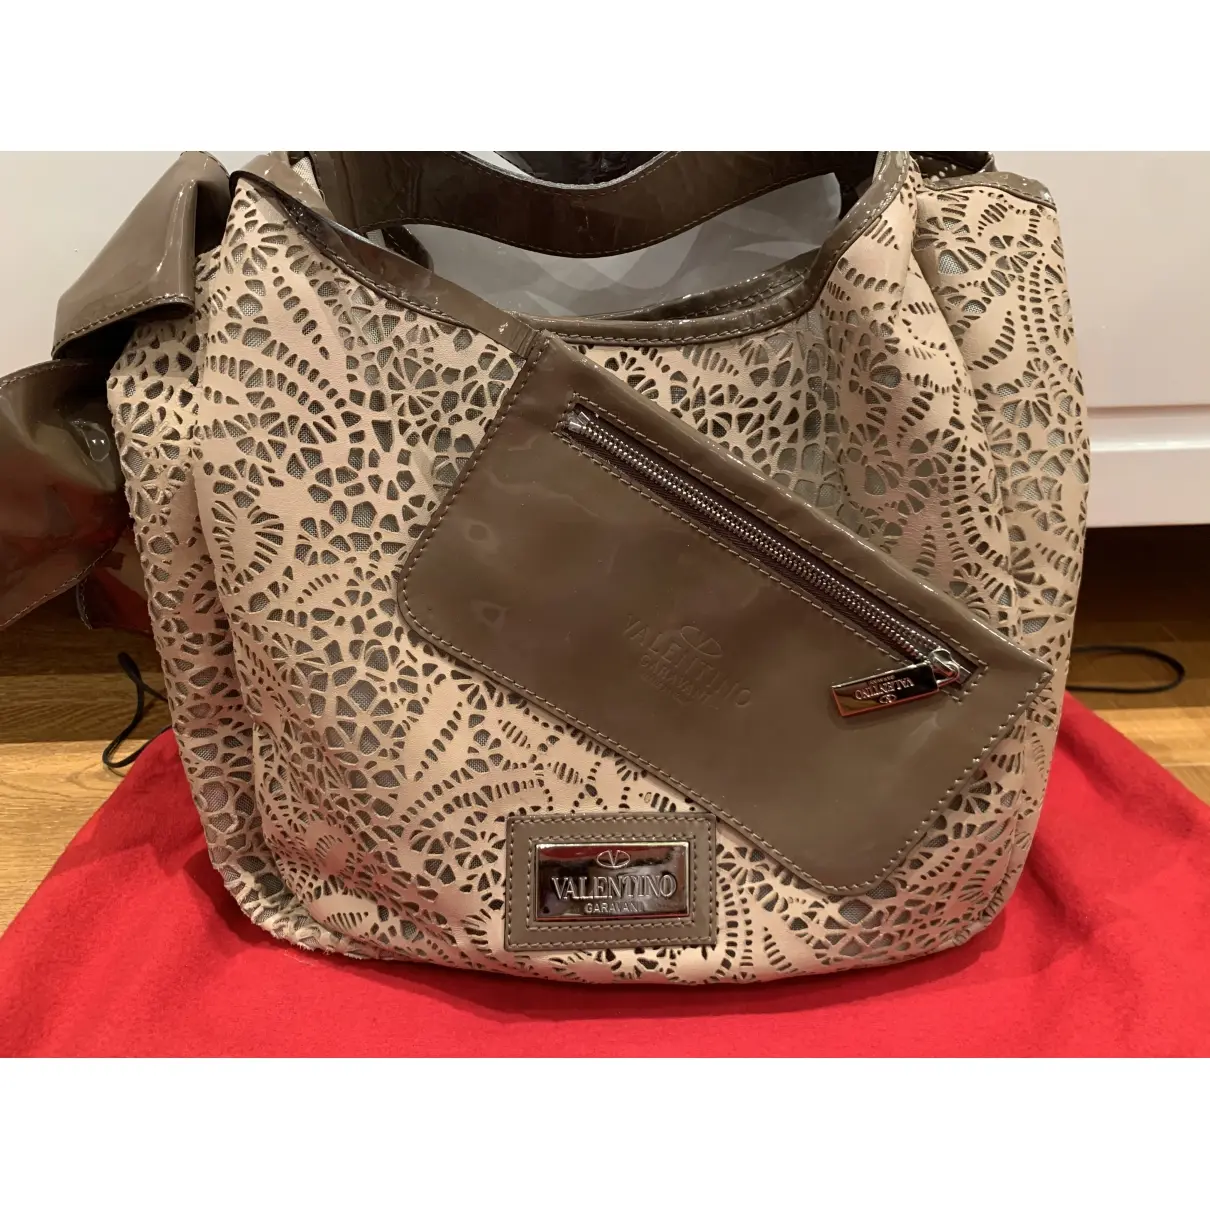 Valentino Garavani Leather handbag for sale